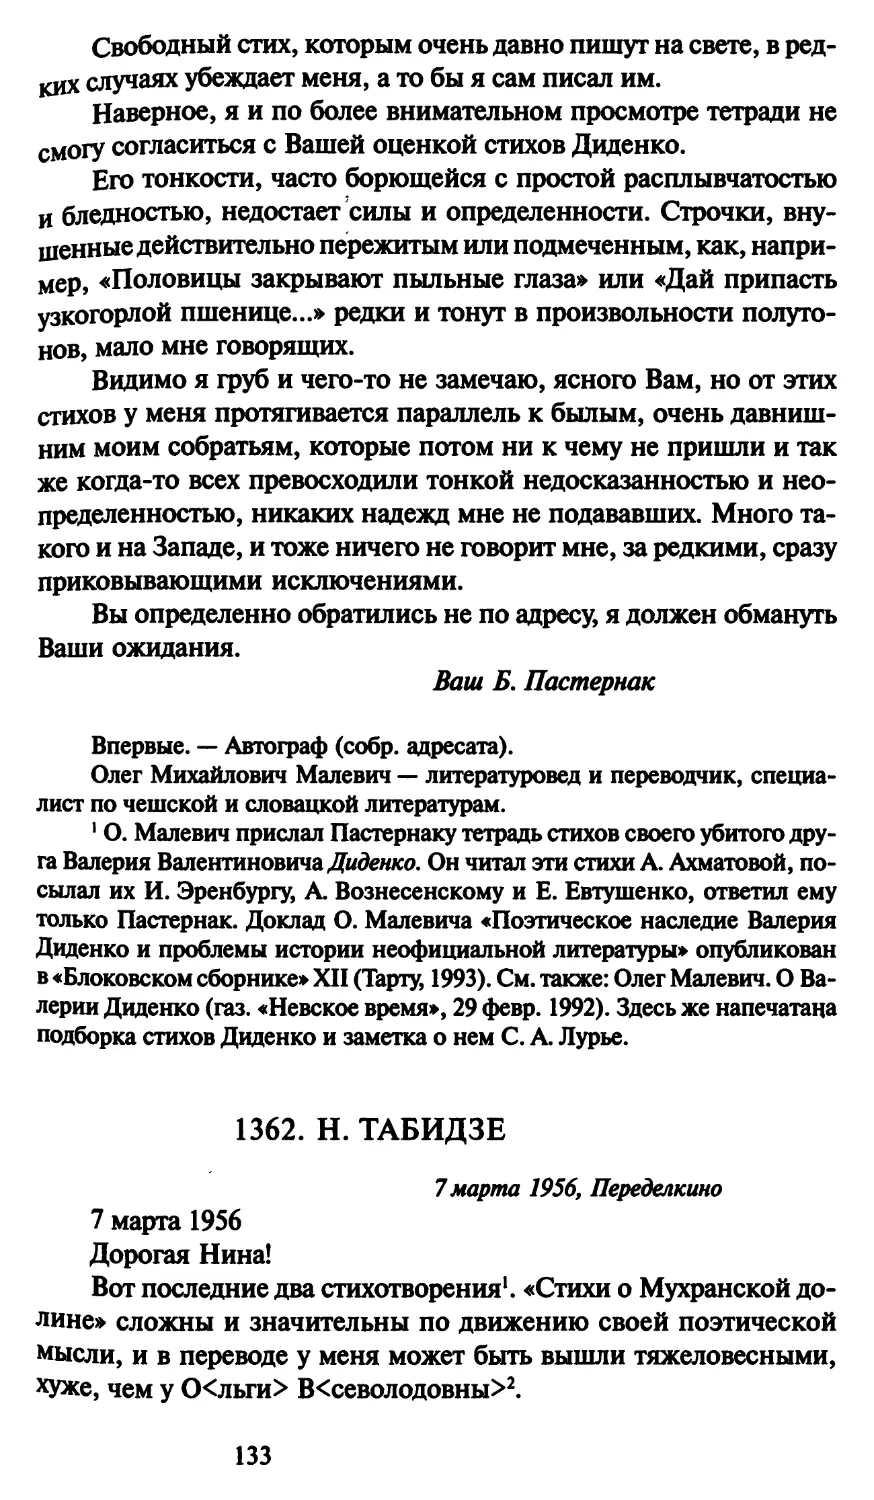 1362. Н. Табидзе 7 марта 1956